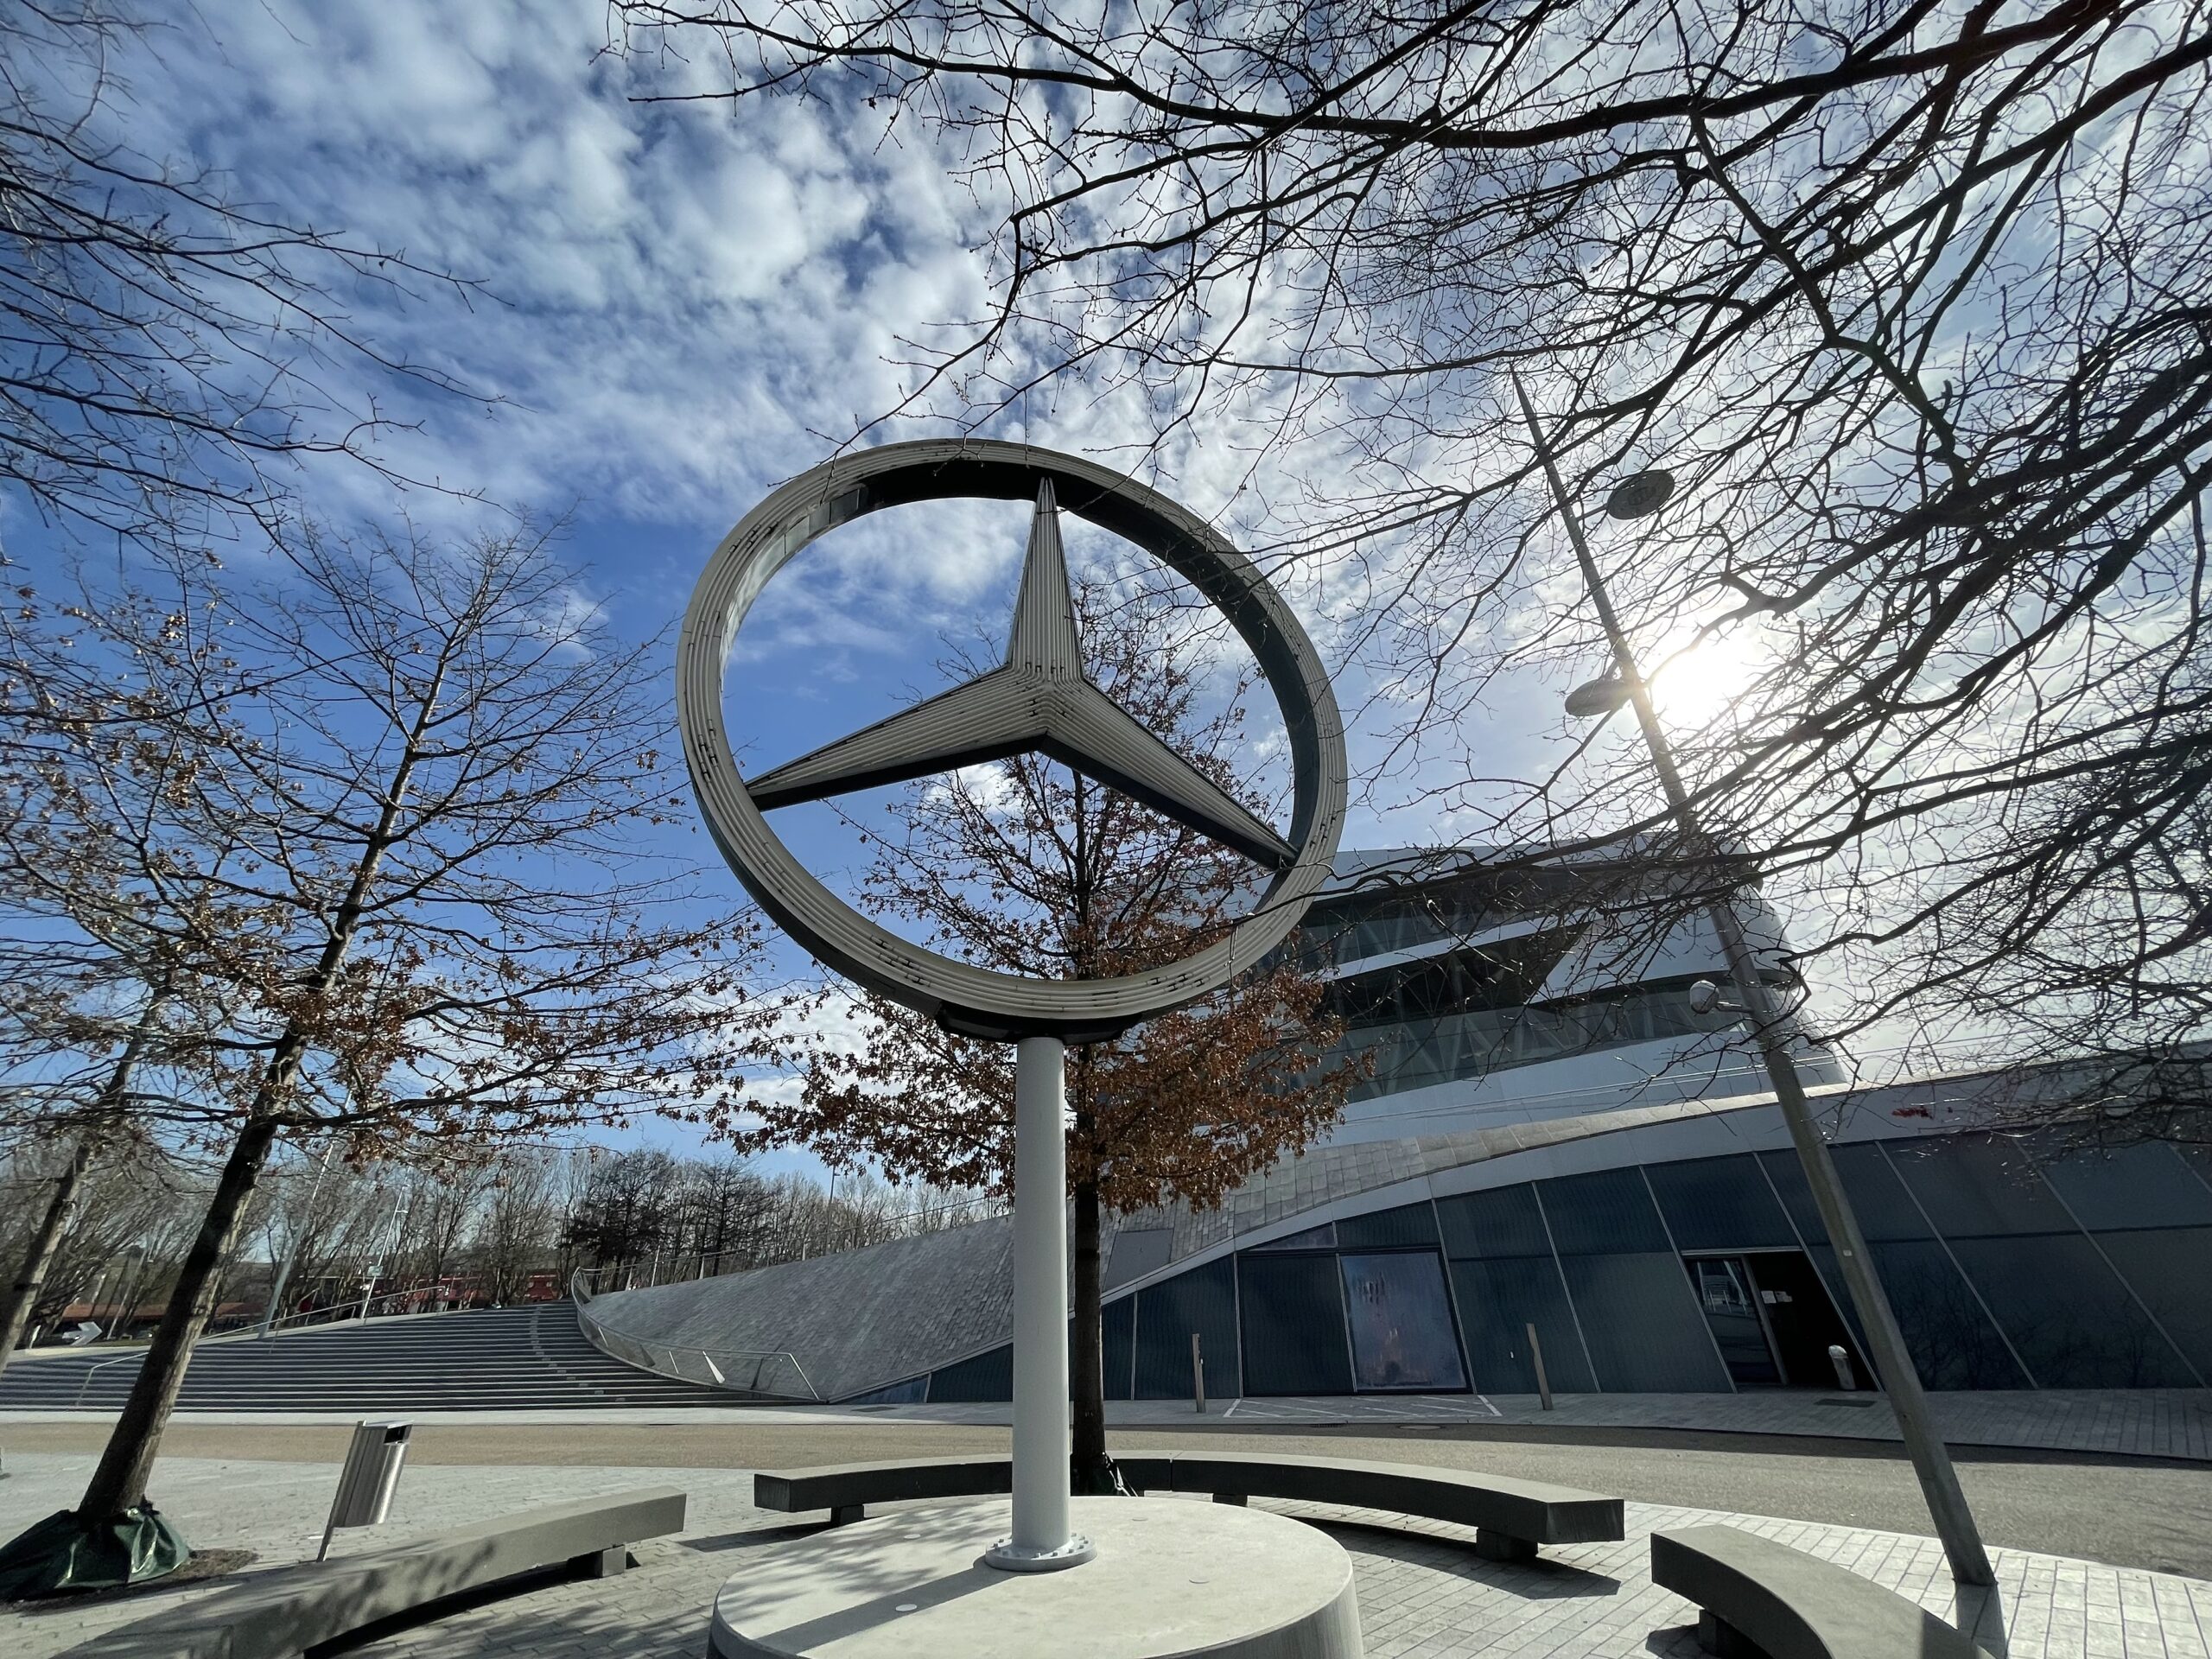 Der Stern steht nun gut positioniert am Mercedes-Benz Museum